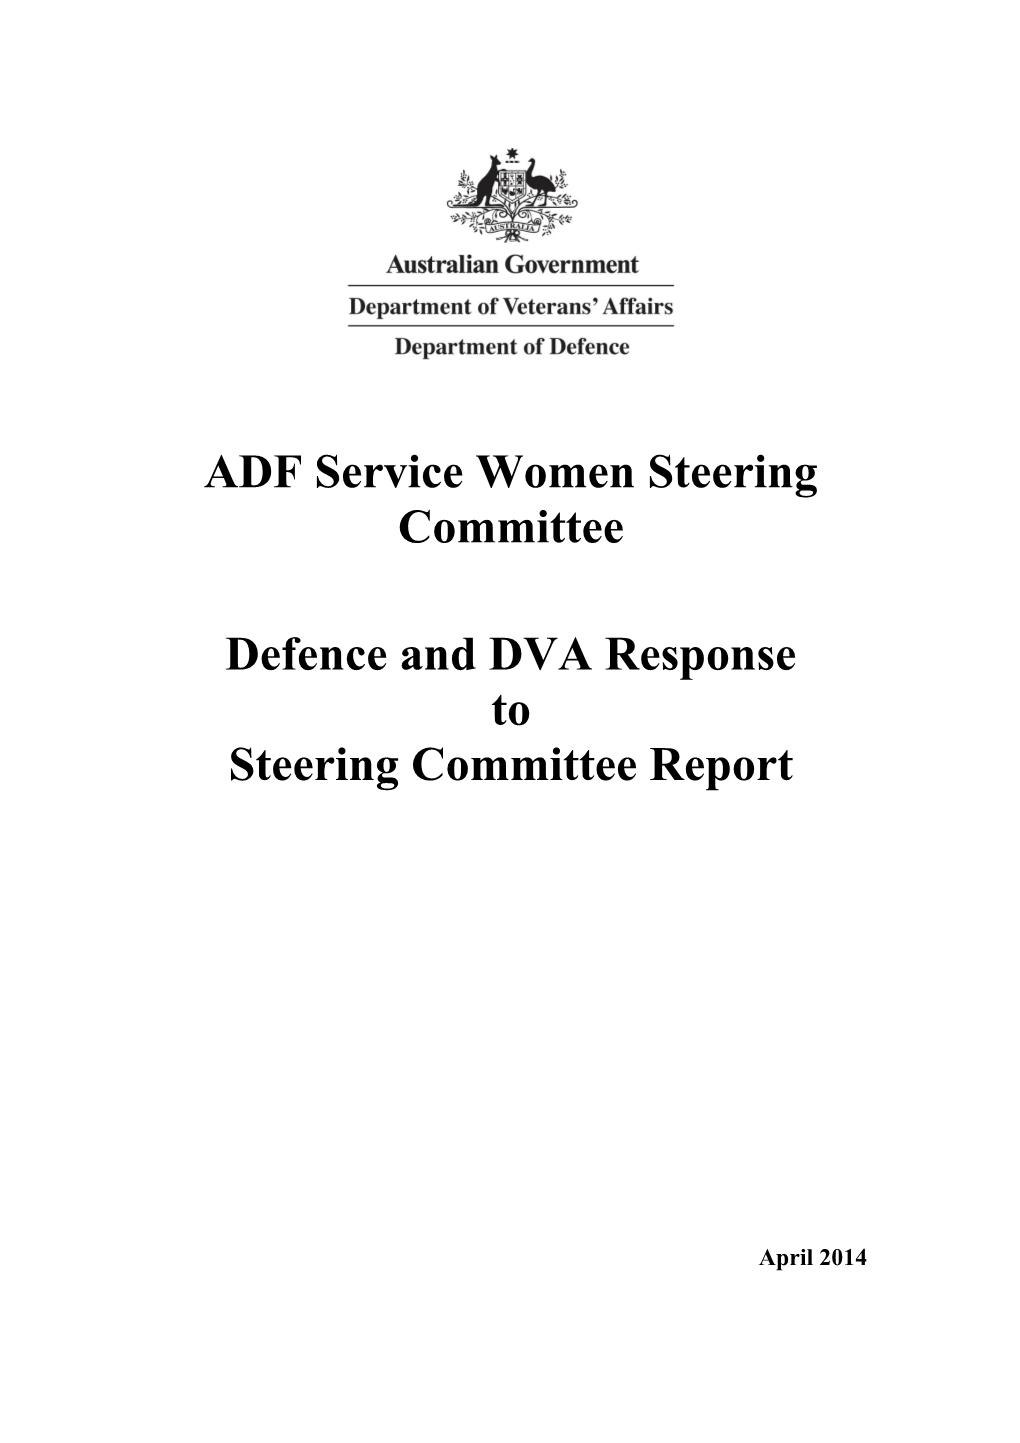 ADF Service Women Steering Committee